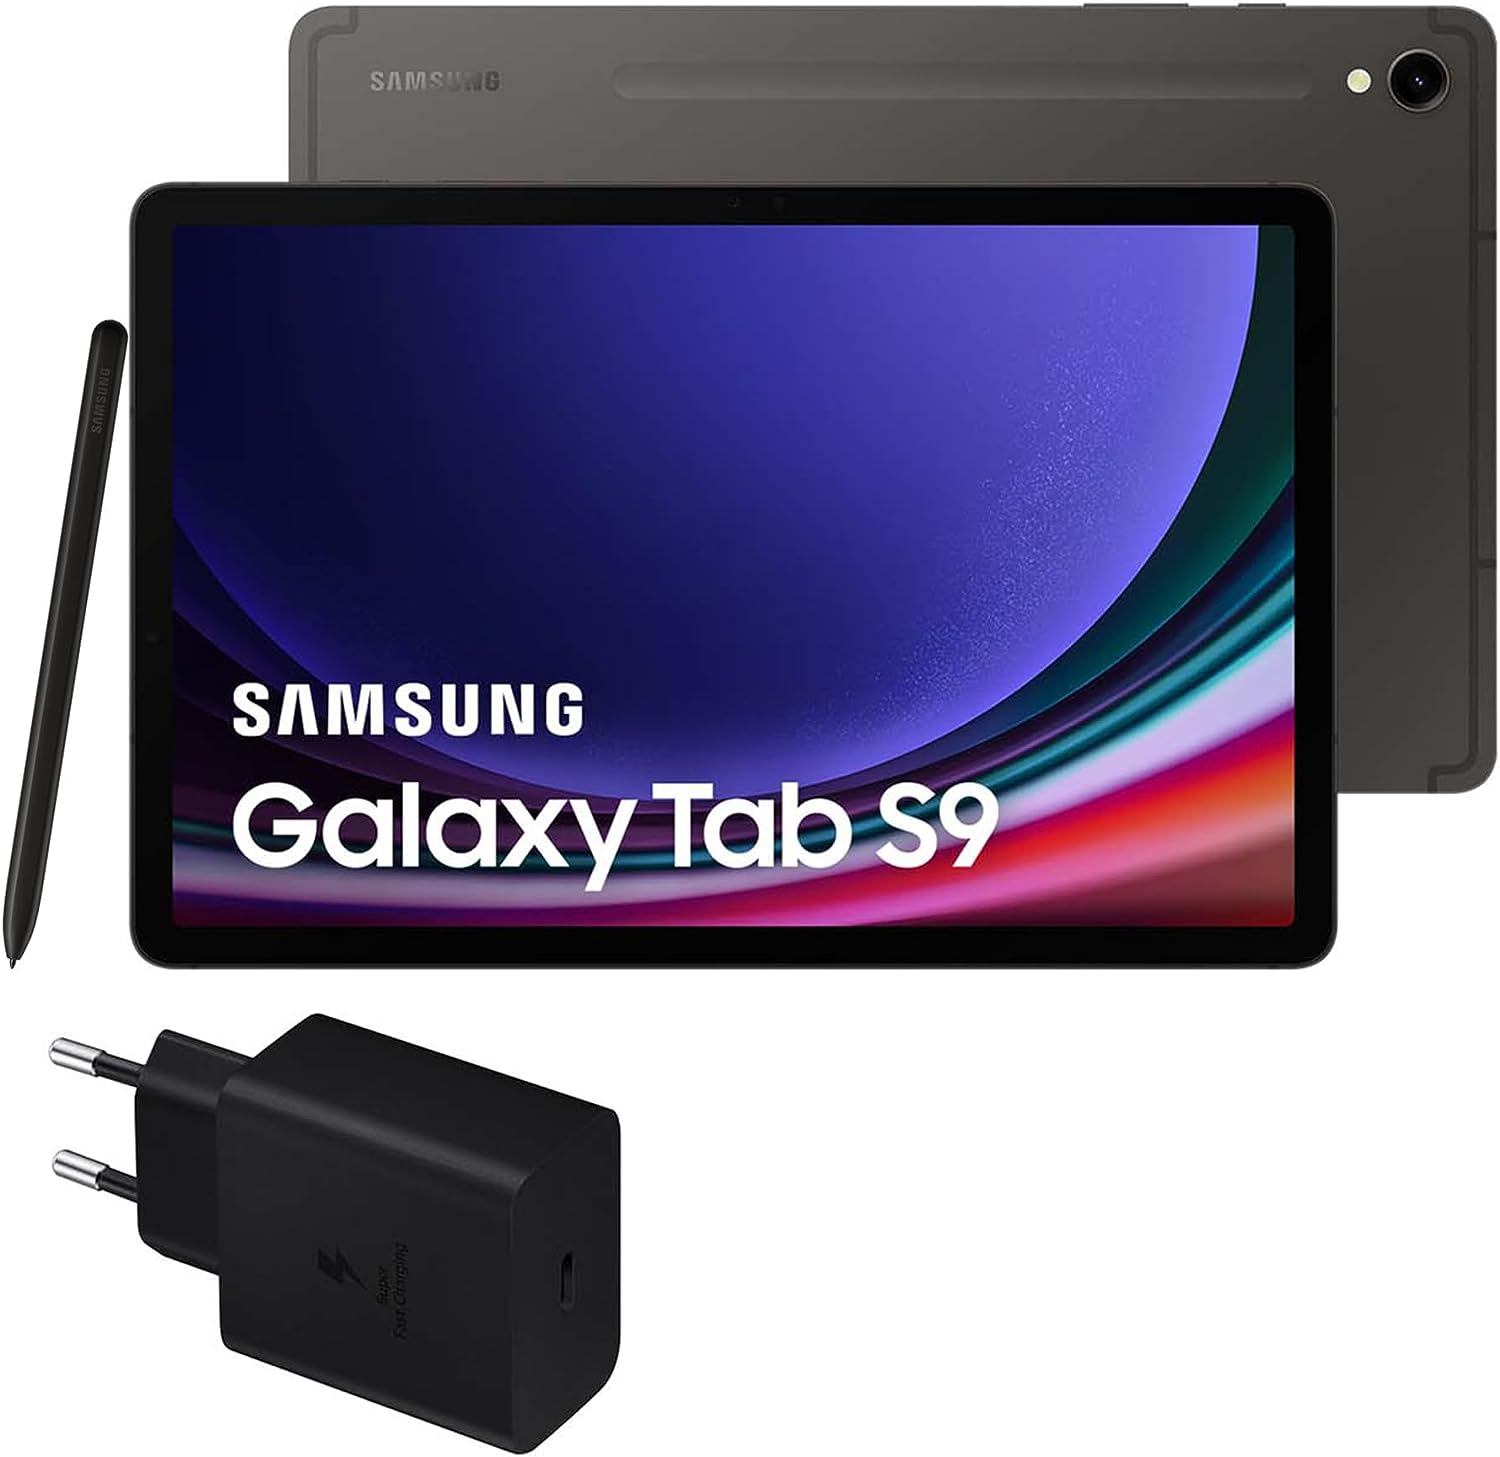 Samsung Galaxy Tab S9 versus iPad Pro